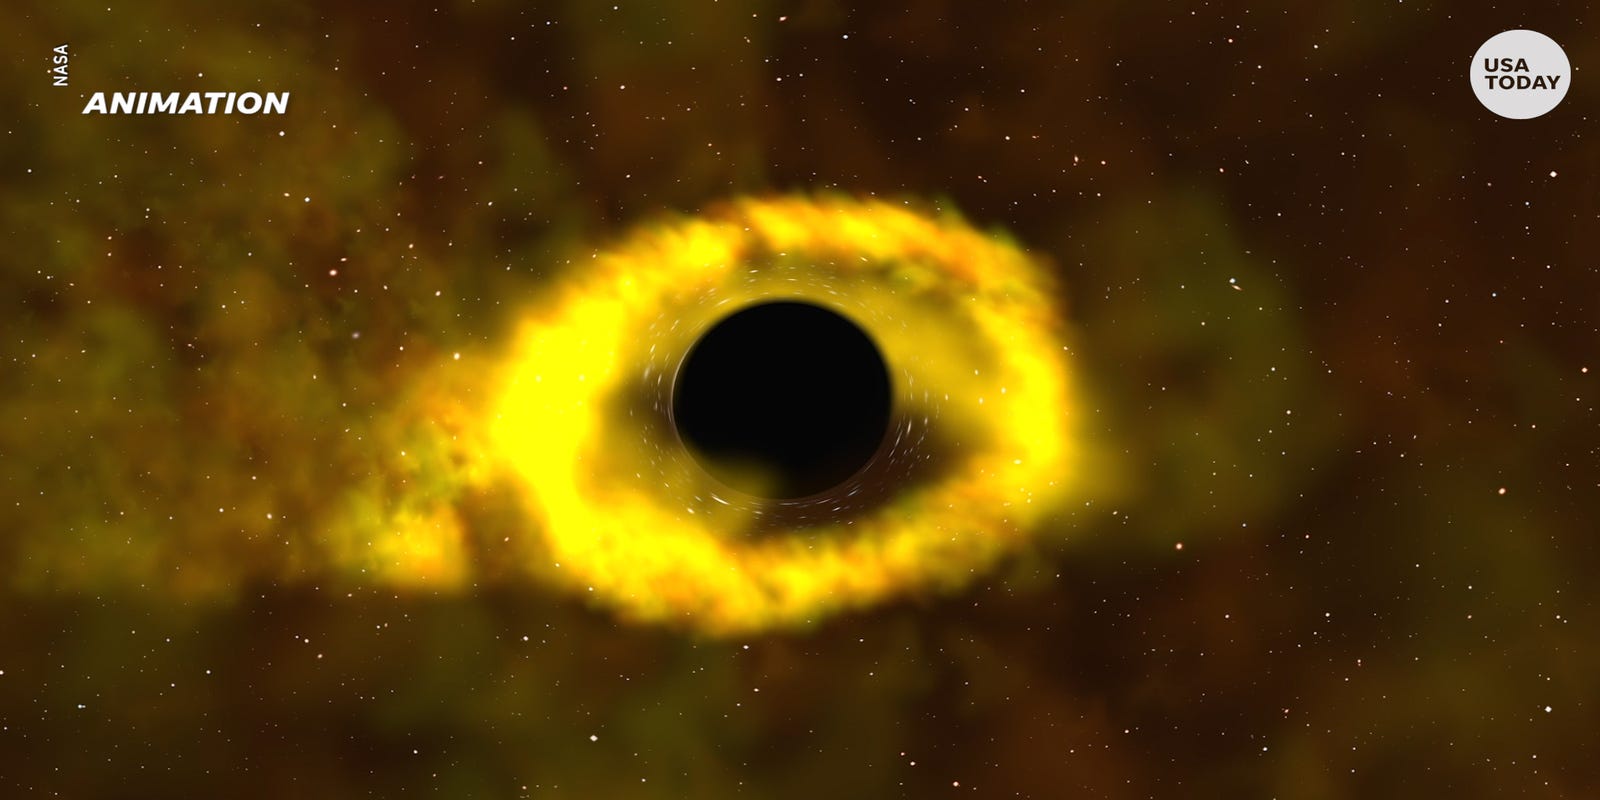 Star-shredding black hole caught on NASA camera